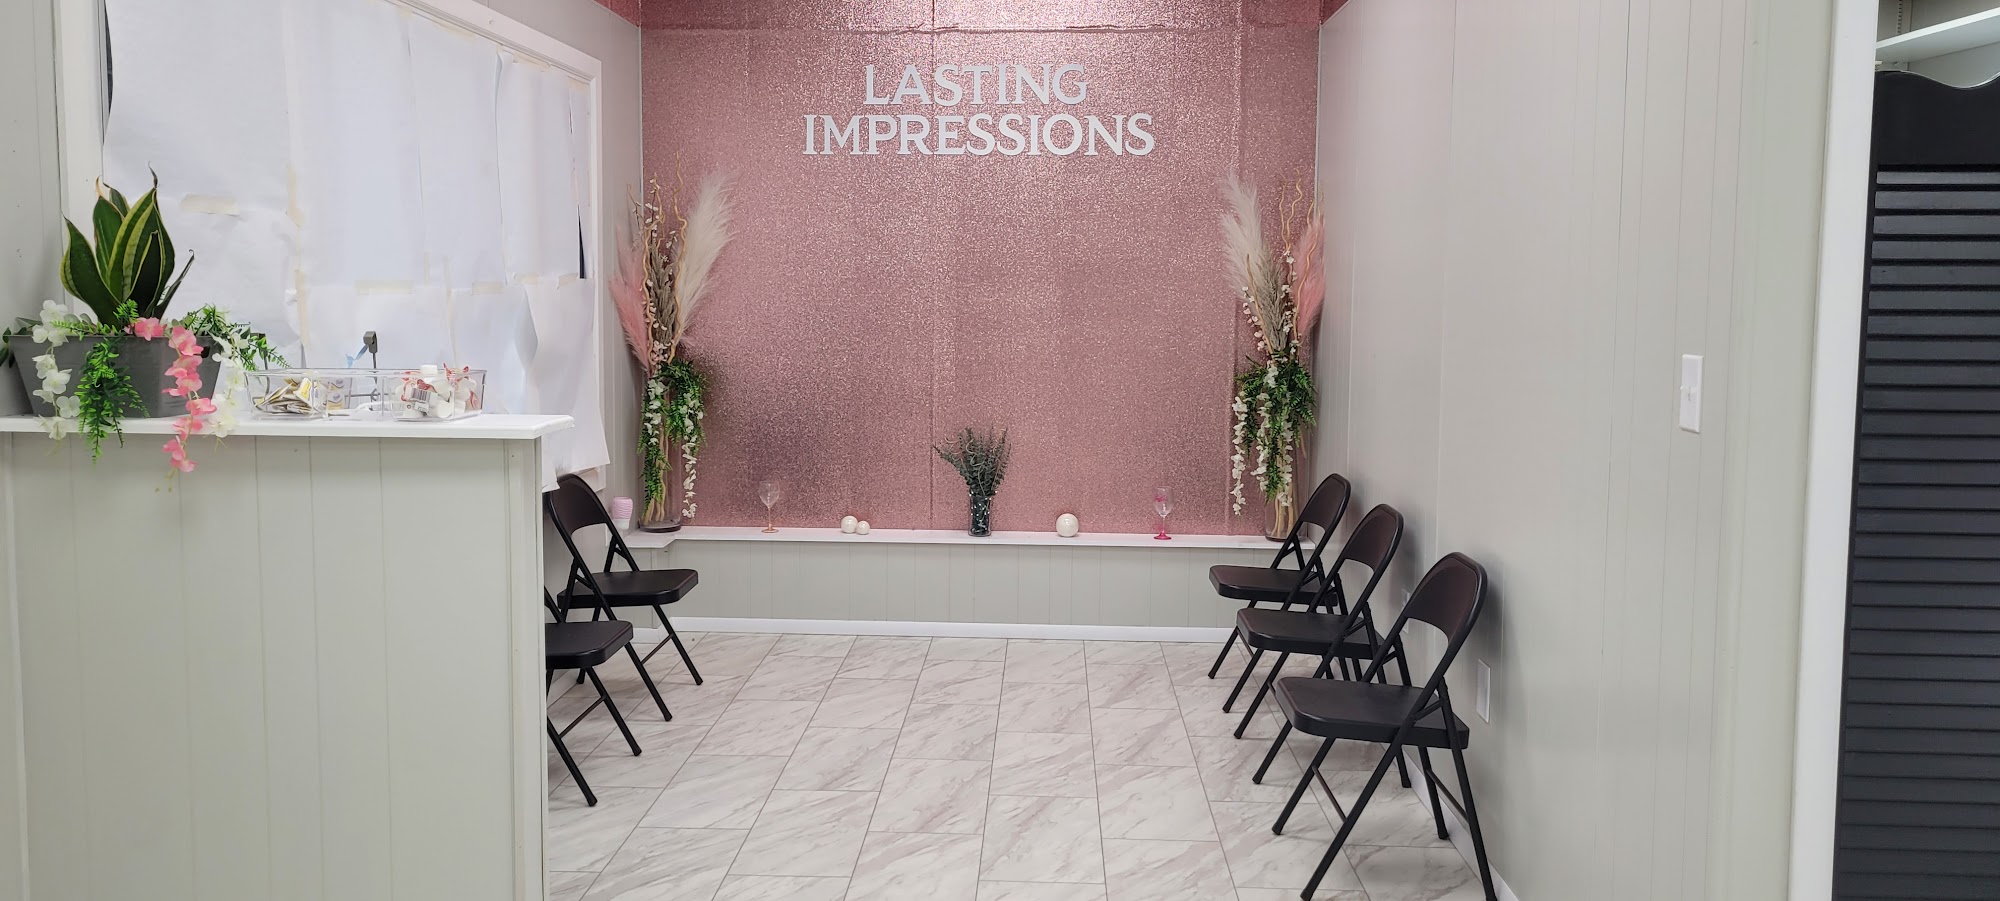 Lasting Impressions Beauty Salon LLC 618 Market St, Sunbury Pennsylvania 17801